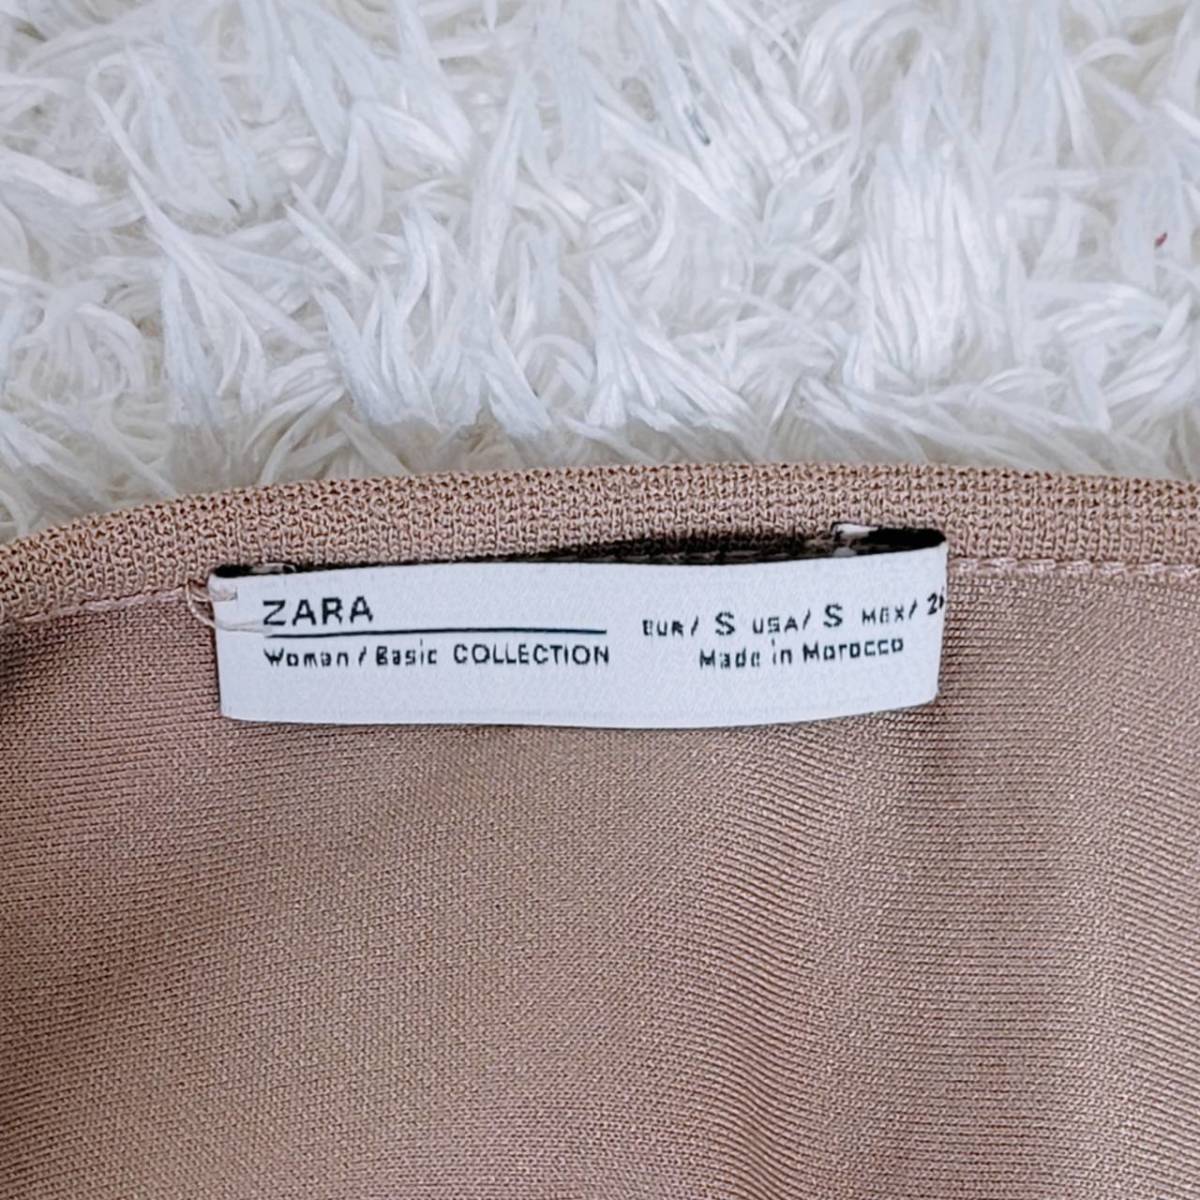 【20443】 ZARA ザラ 半袖シャツ S 茶色 ブラウン 毛皮 カジュアル シンプル お出かけ 肌触り 春夏 ゆったり